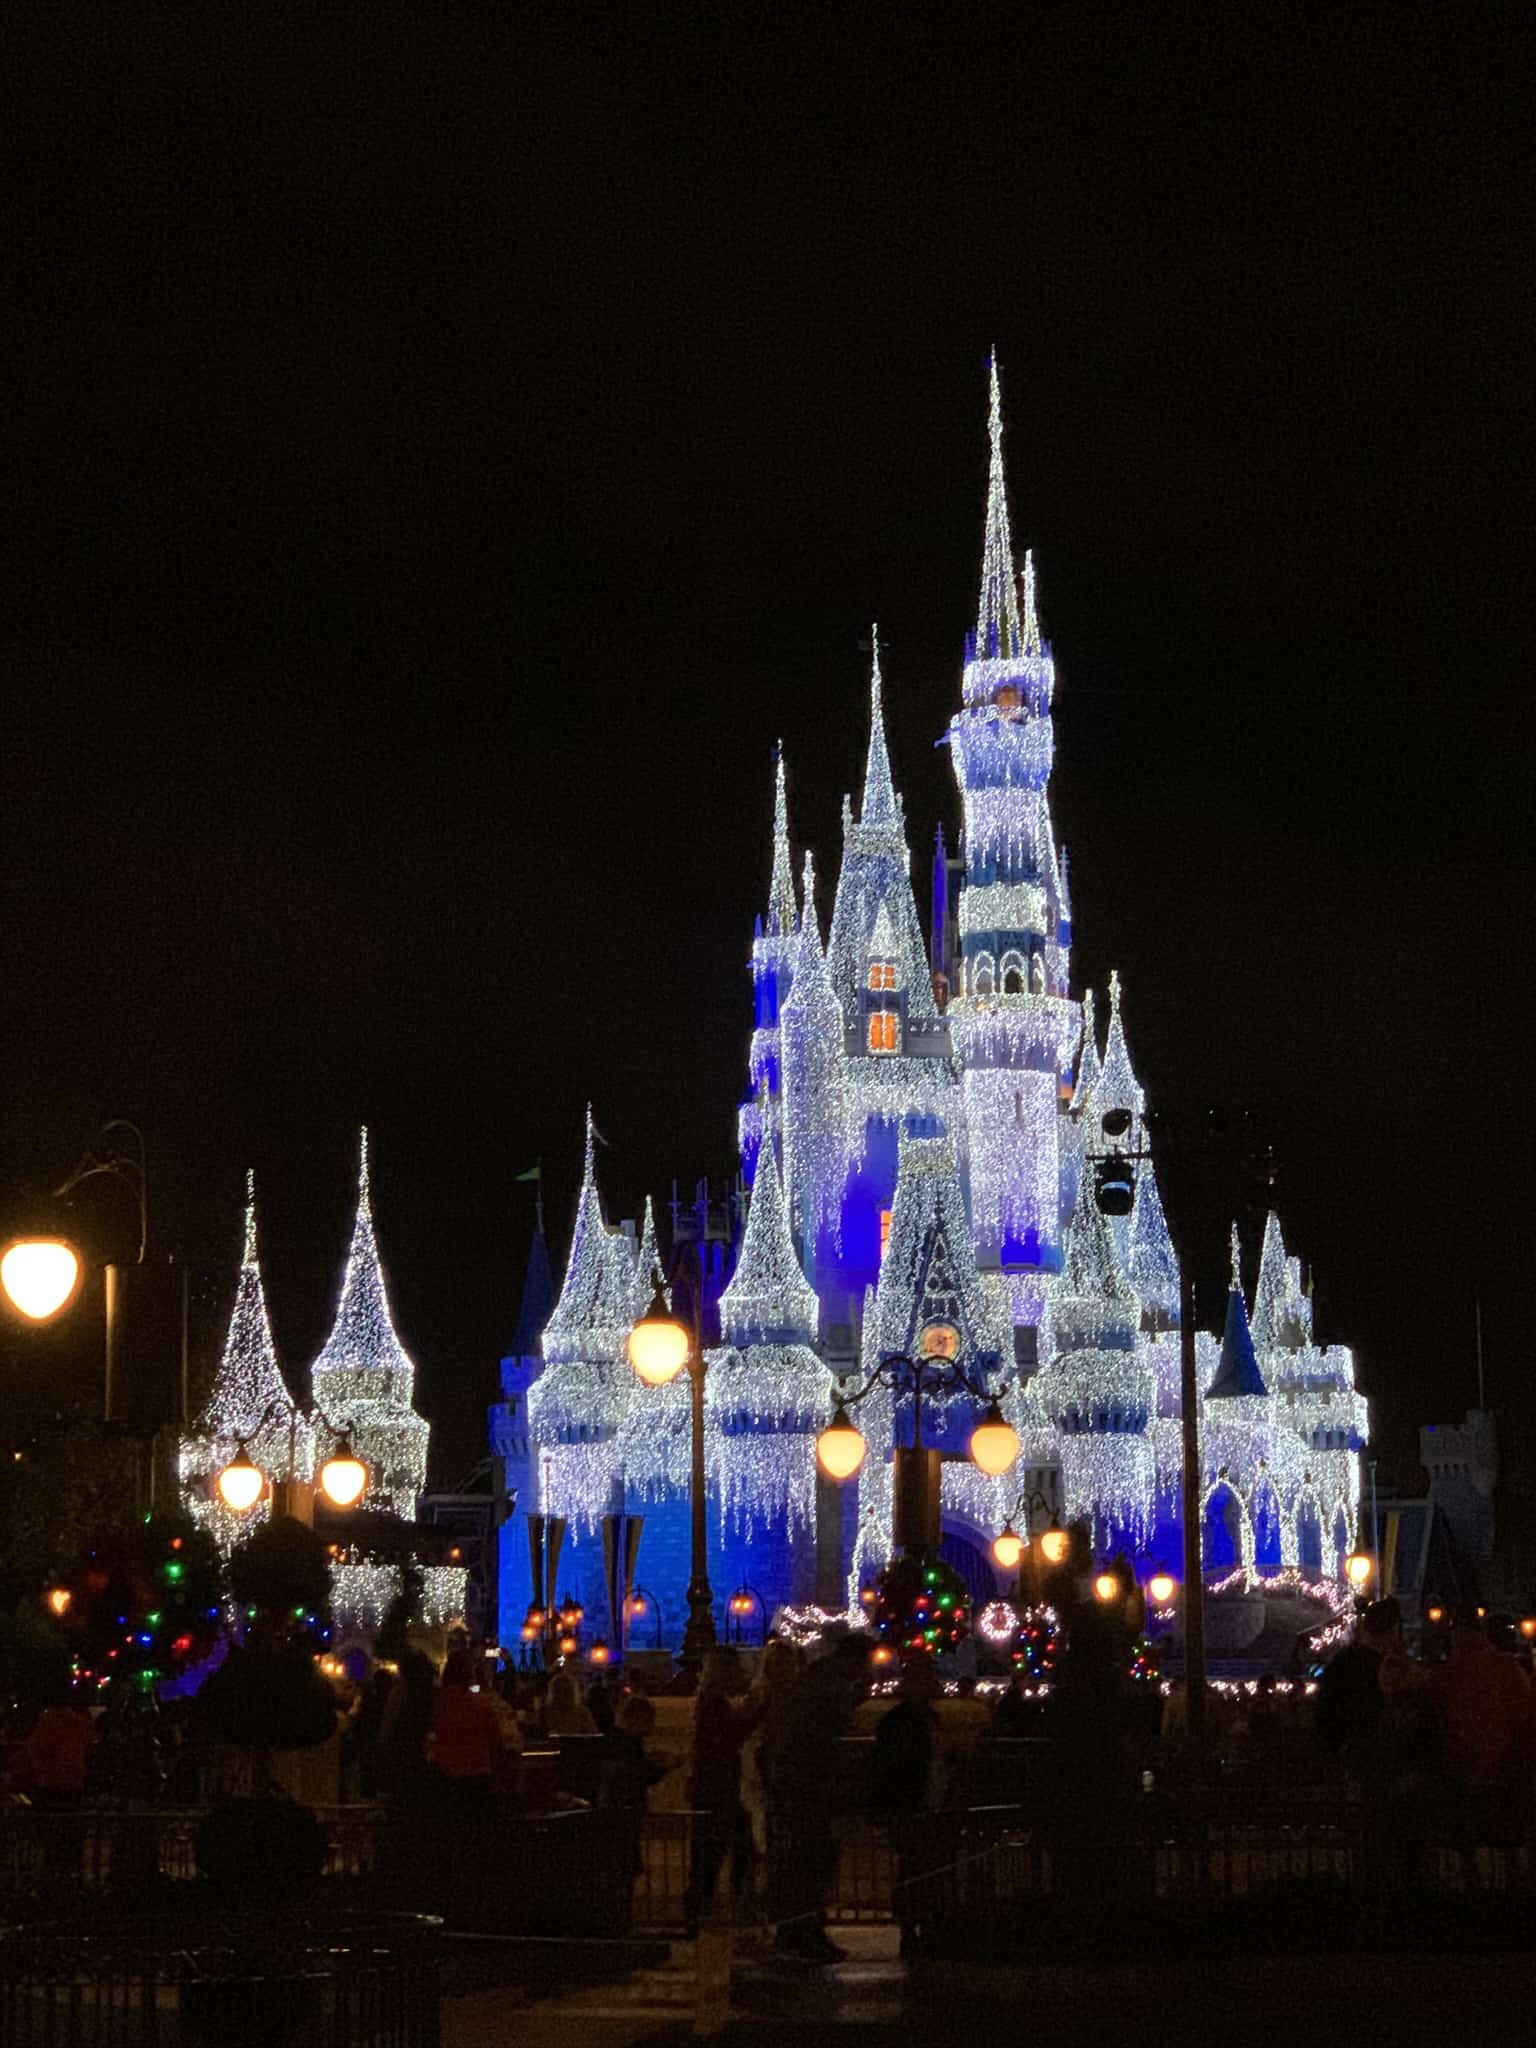 the Magic Kingdom Castle at night